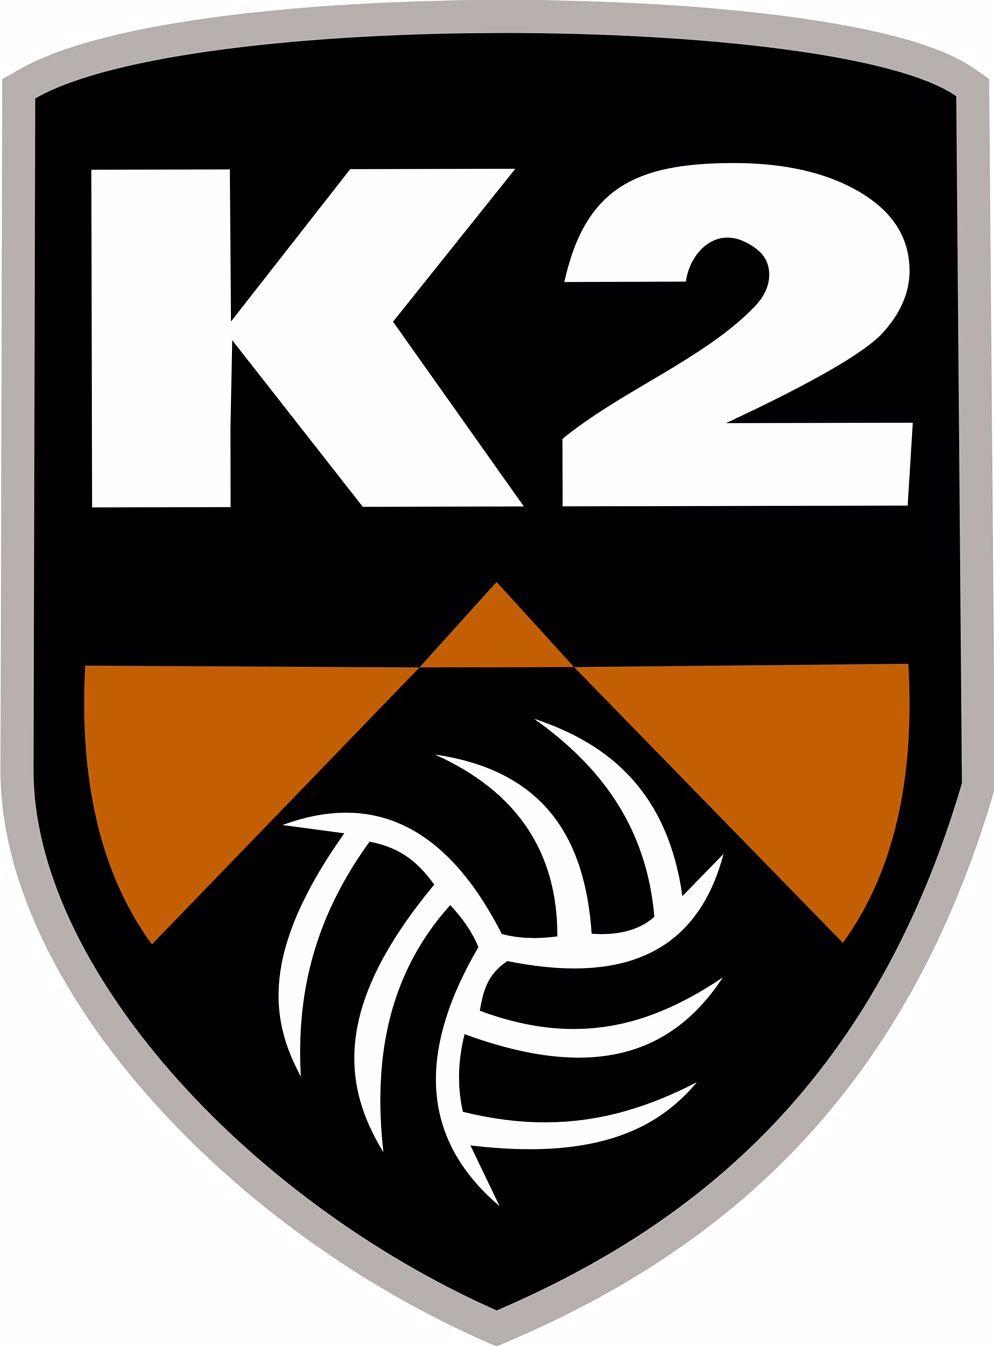 K2 Logo - Peak Challenge | Ethos Volleyball Club